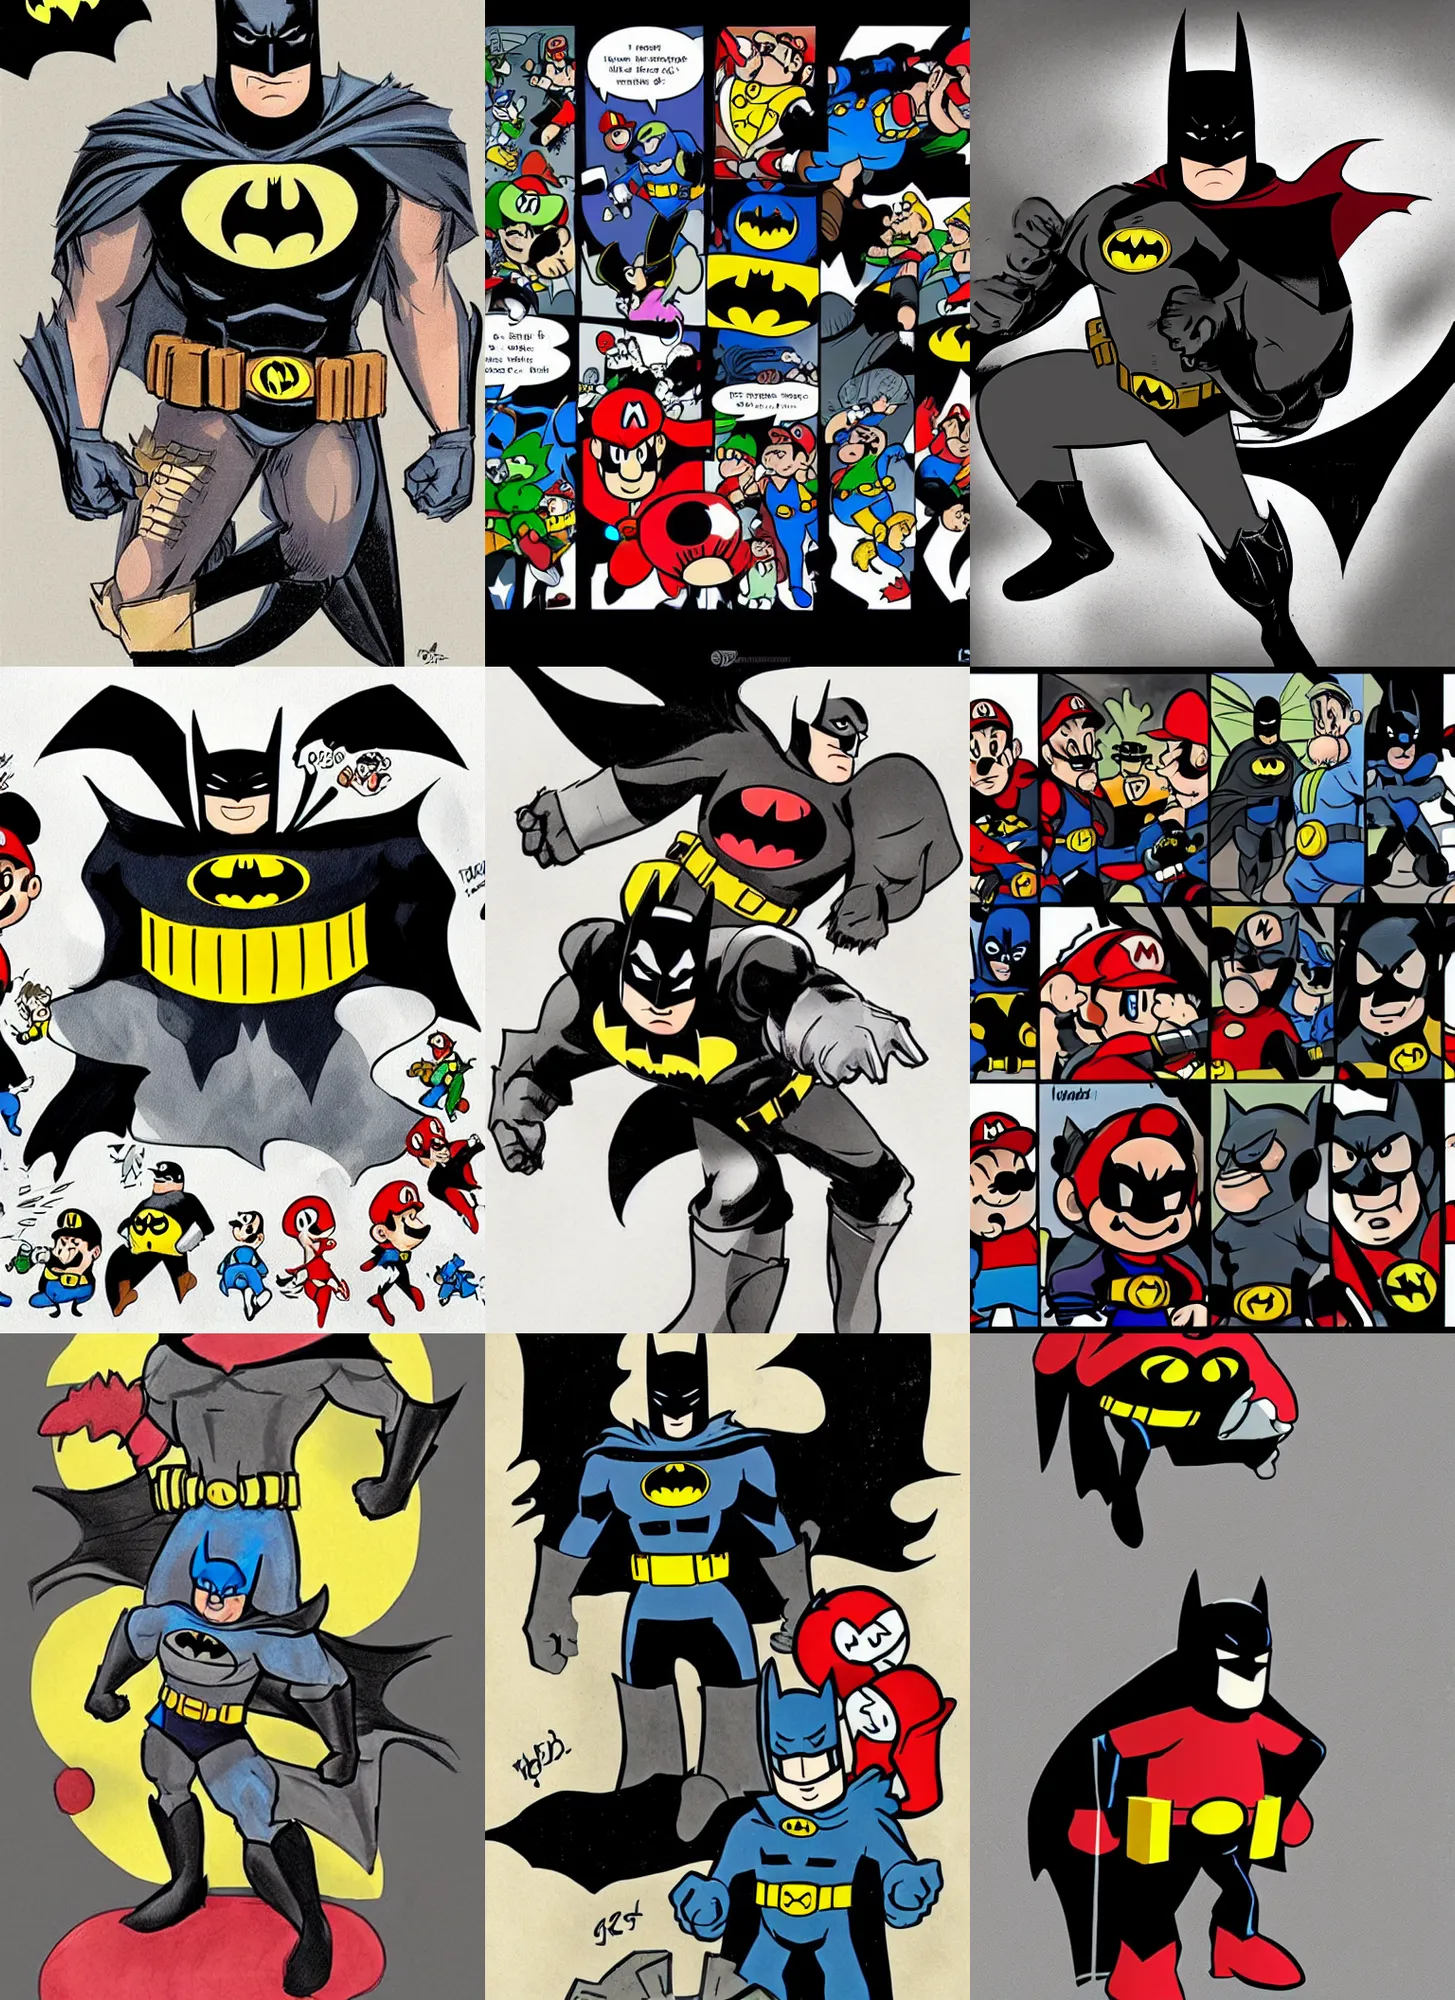 batman and mario fusion, comics concept art | Stable Diffusion | OpenArt